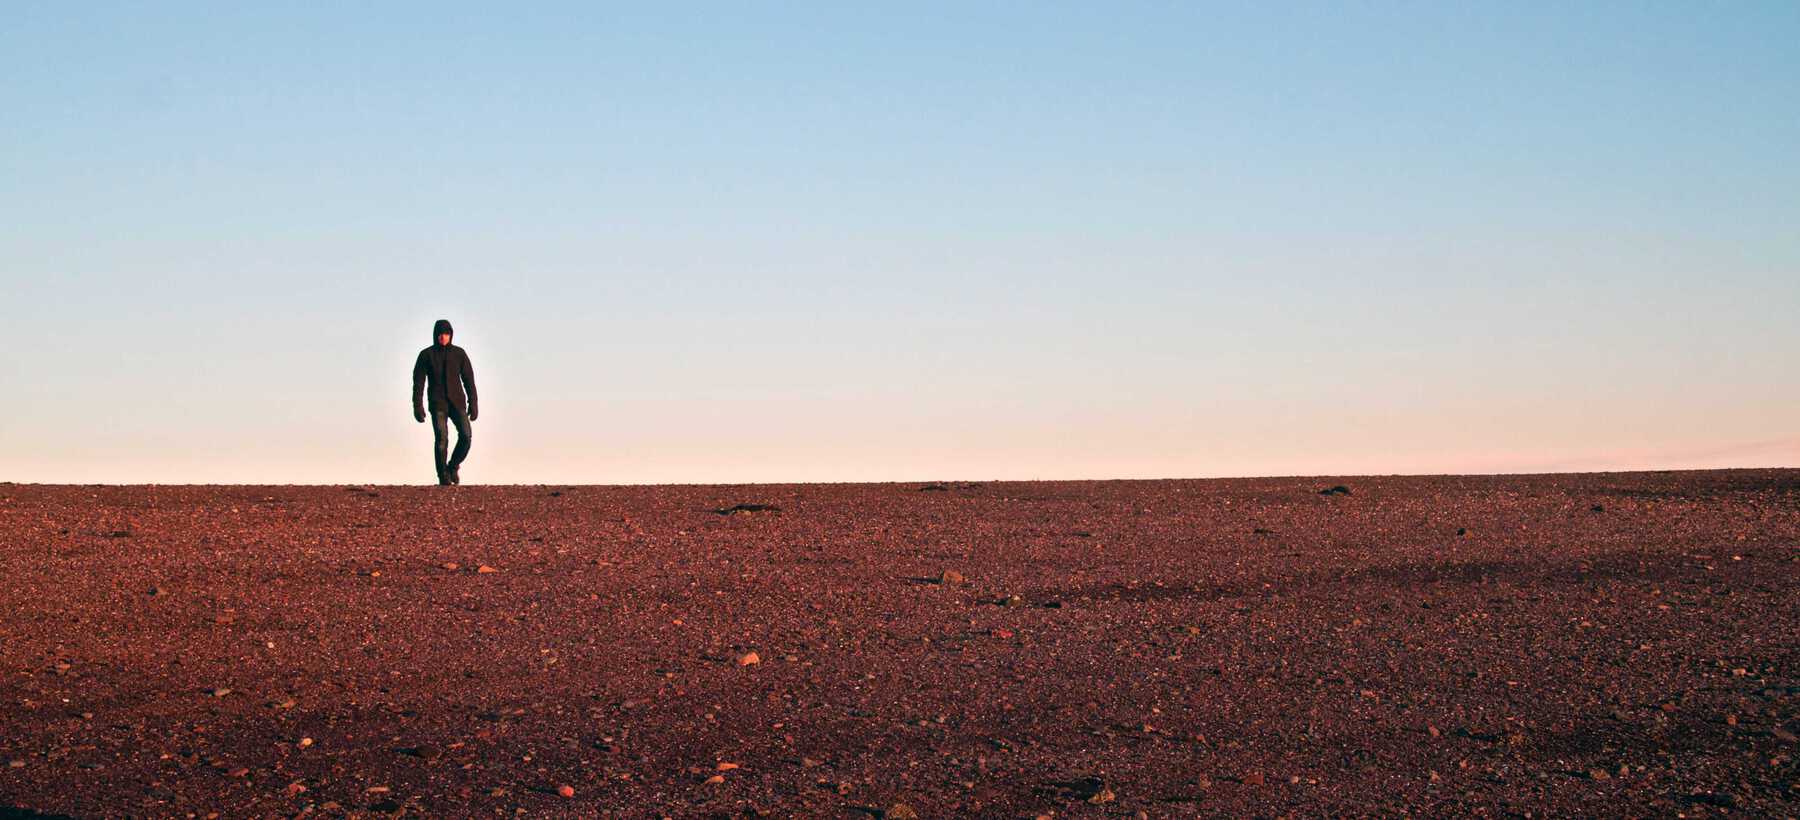 Person in winter coat walking on barren reddish sand